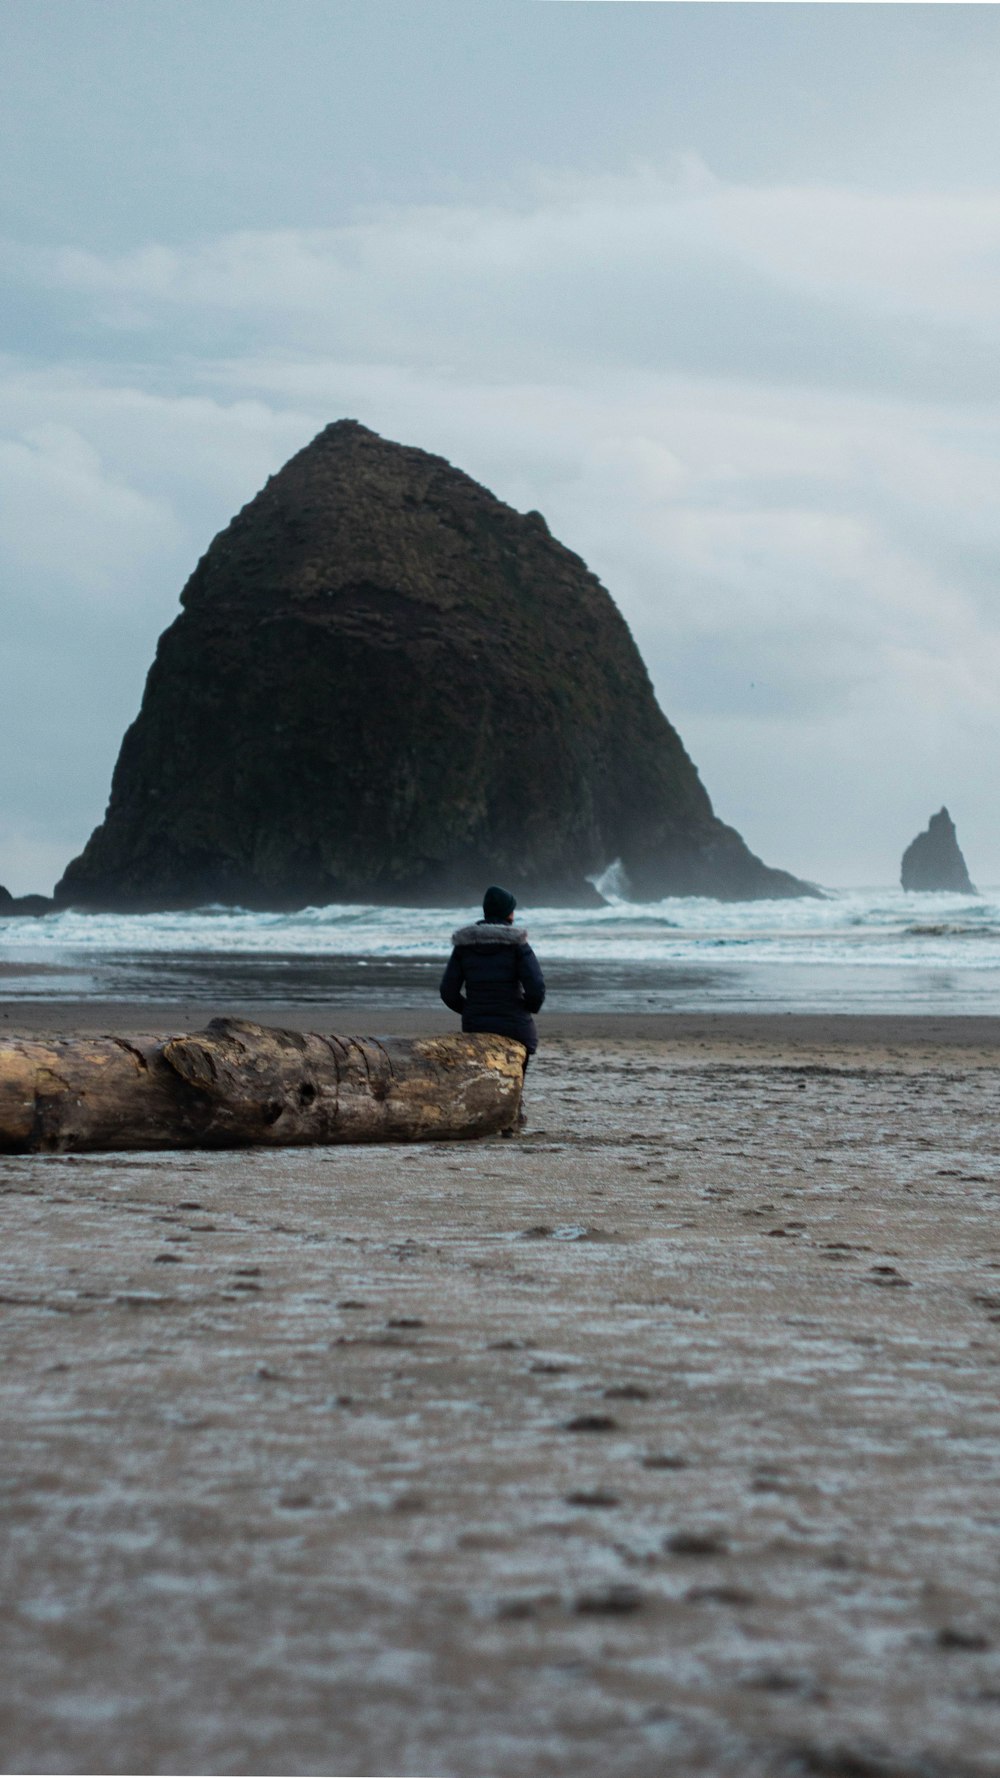 a person sitting on a log on a beach